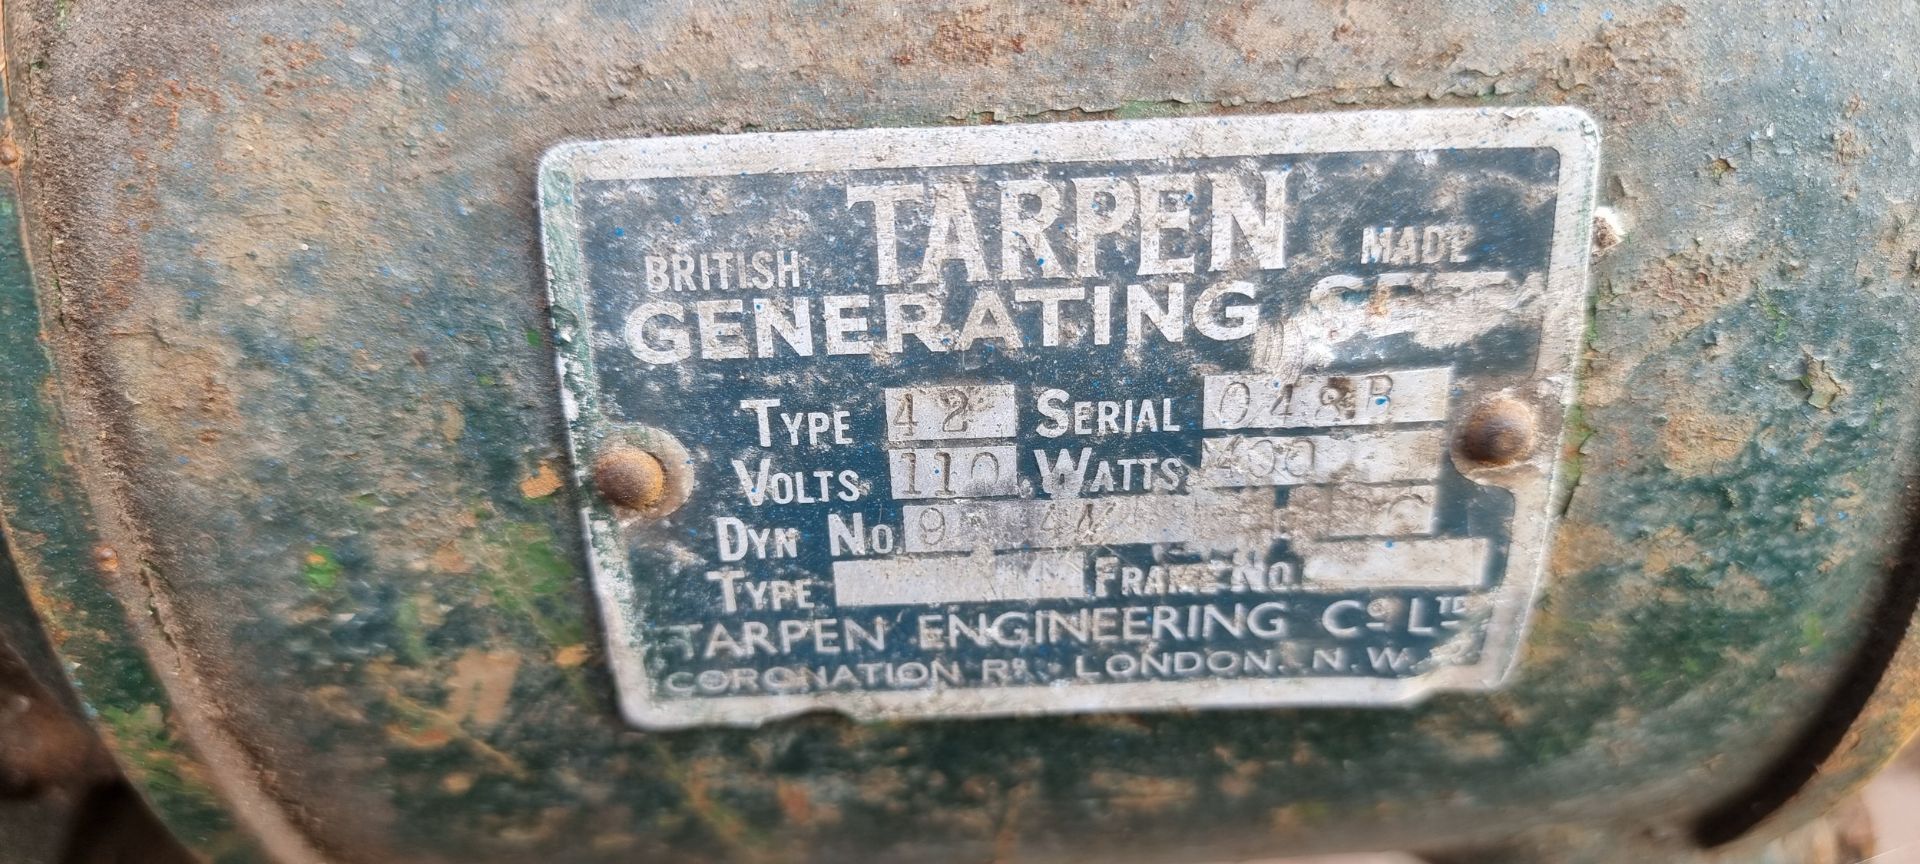 A Tarpen generator - Image 2 of 2